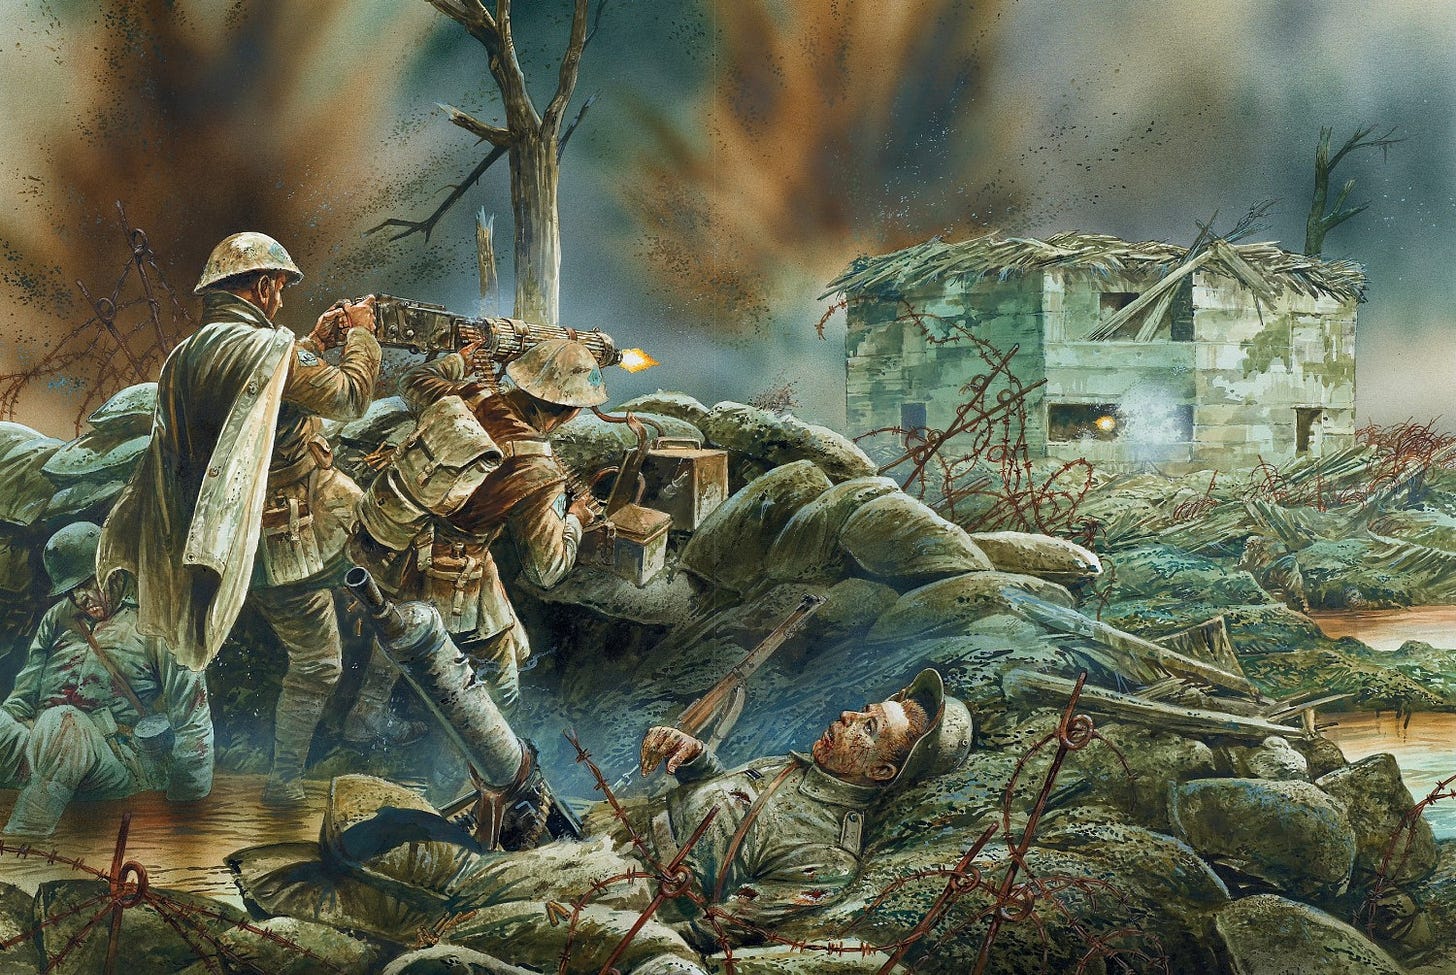 Passchendaele: Britain's Most Controversial WW1 Battle